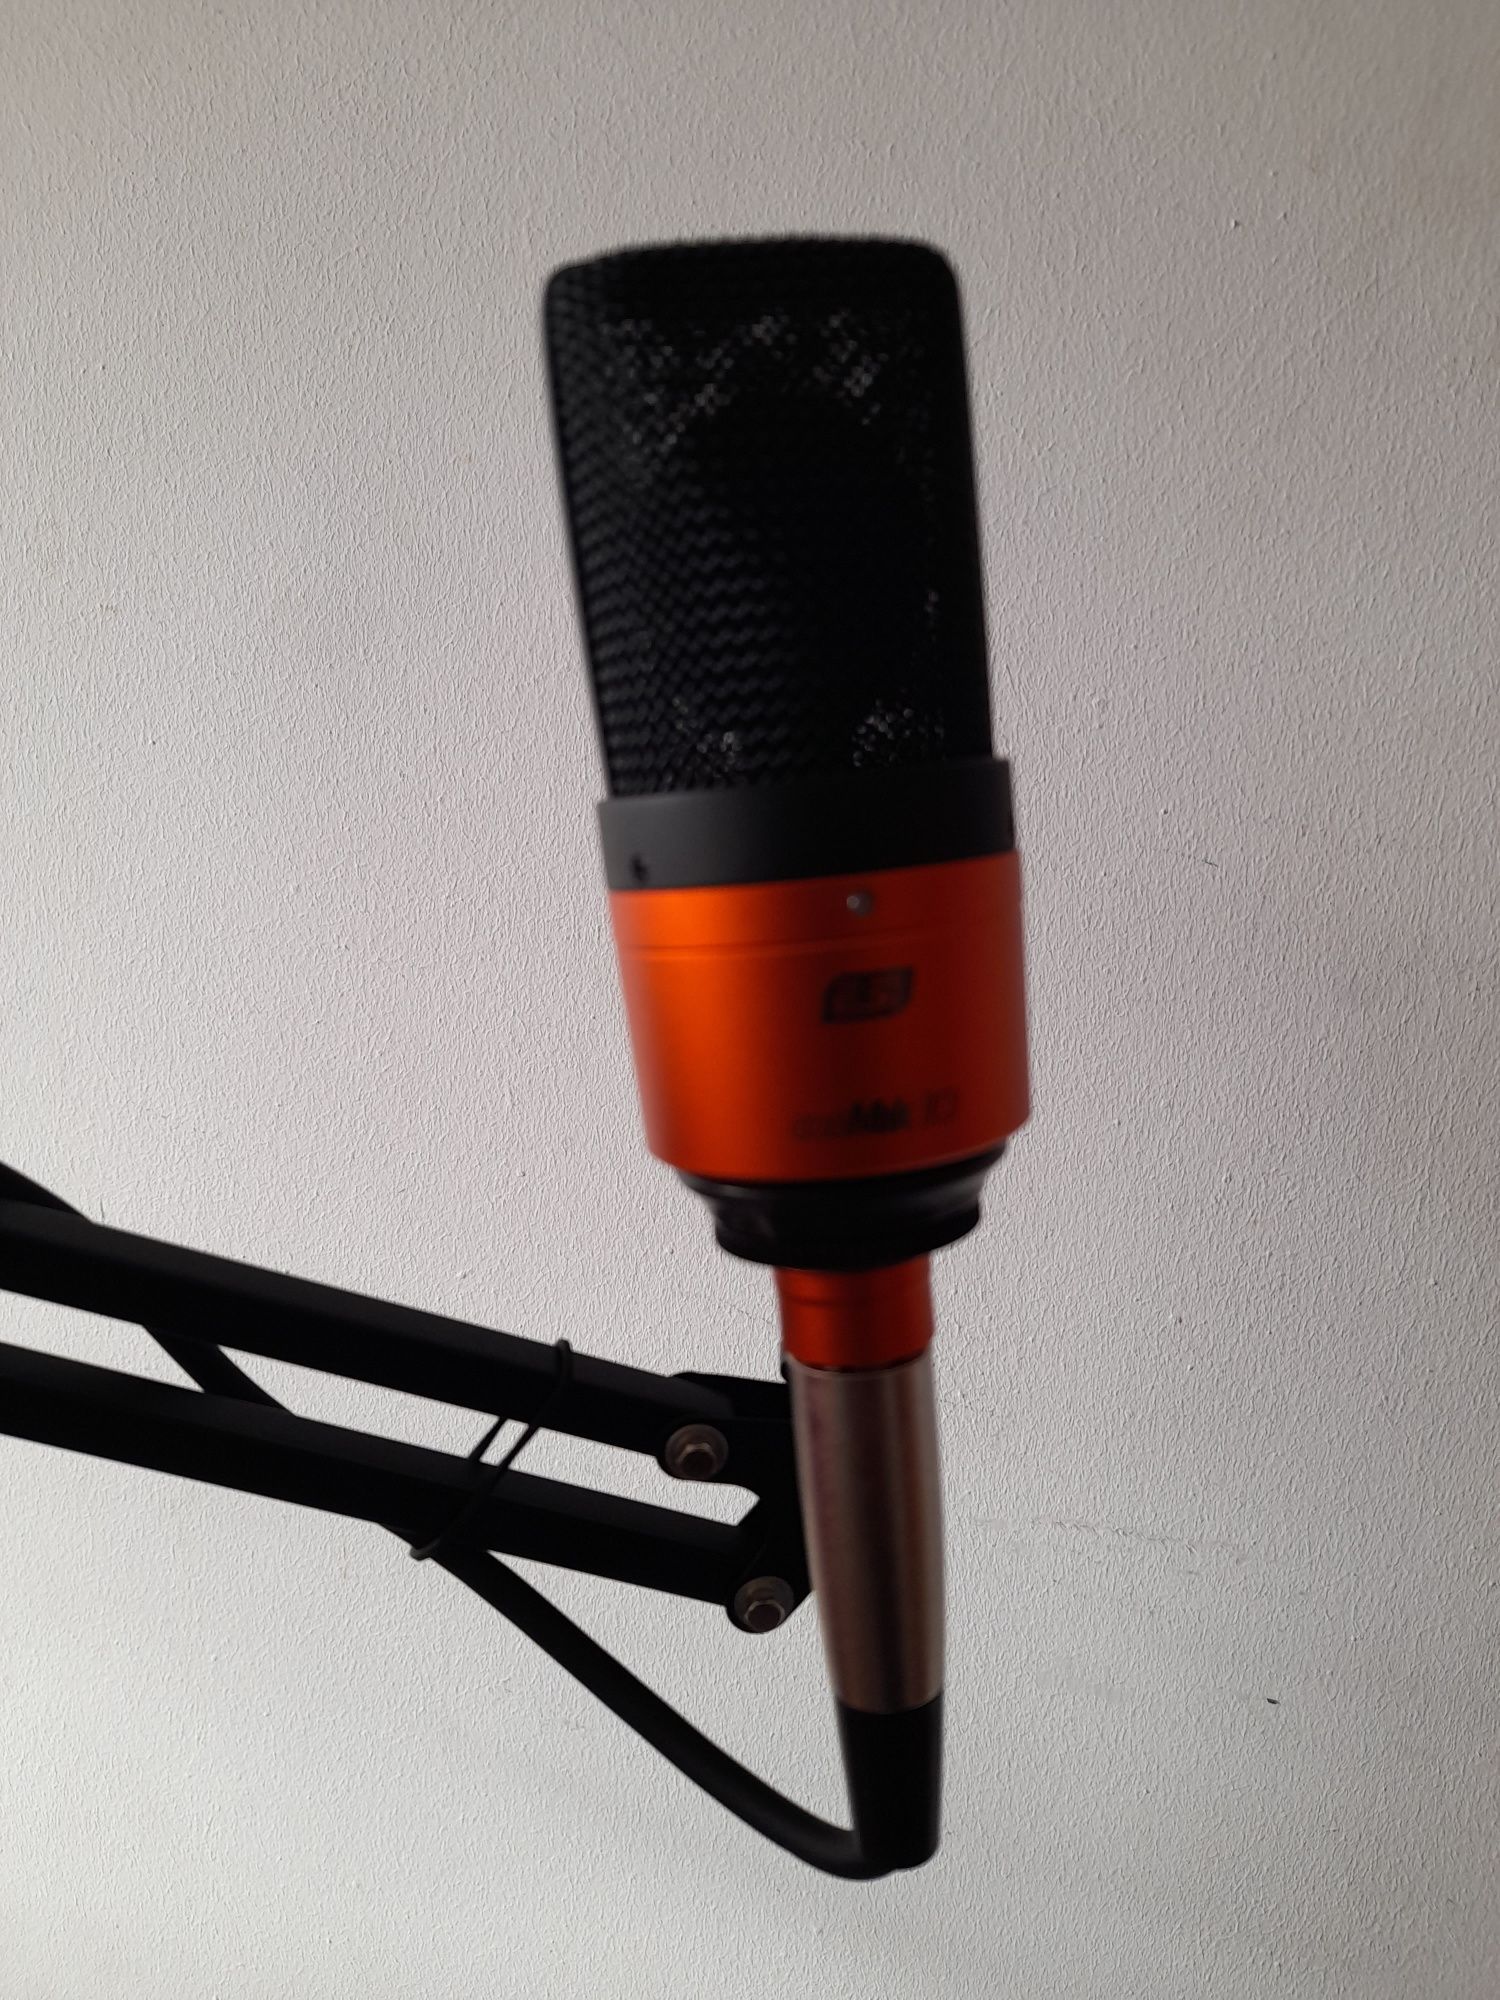 Professional Studio Condenser Microphone